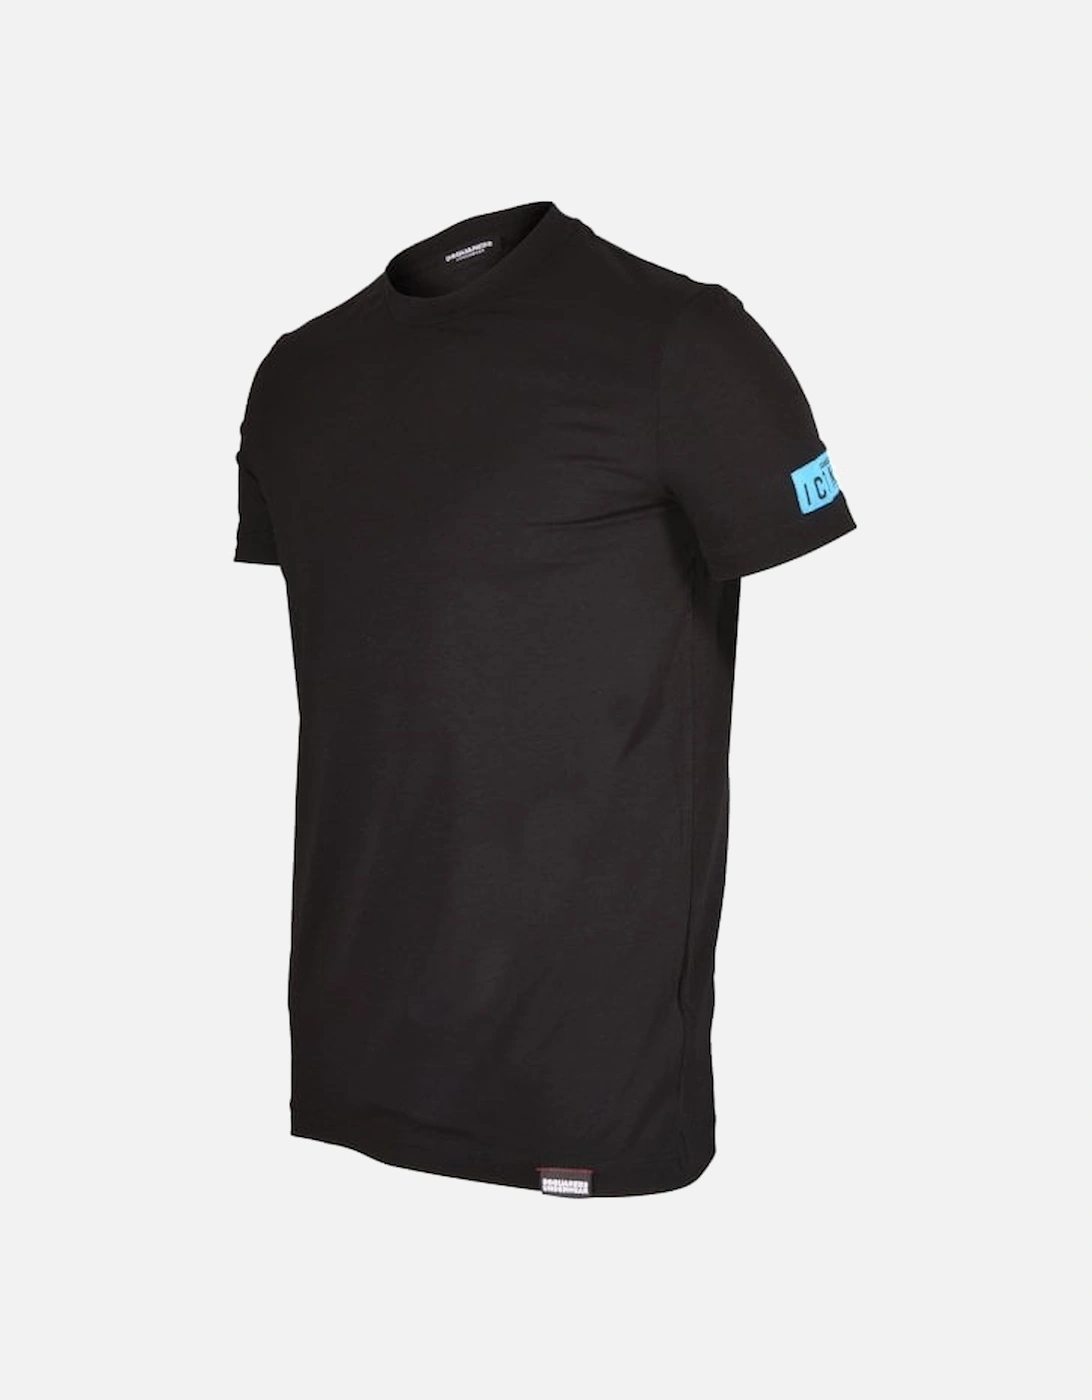 ICON Logo Patch T-Shirt, Black/blue